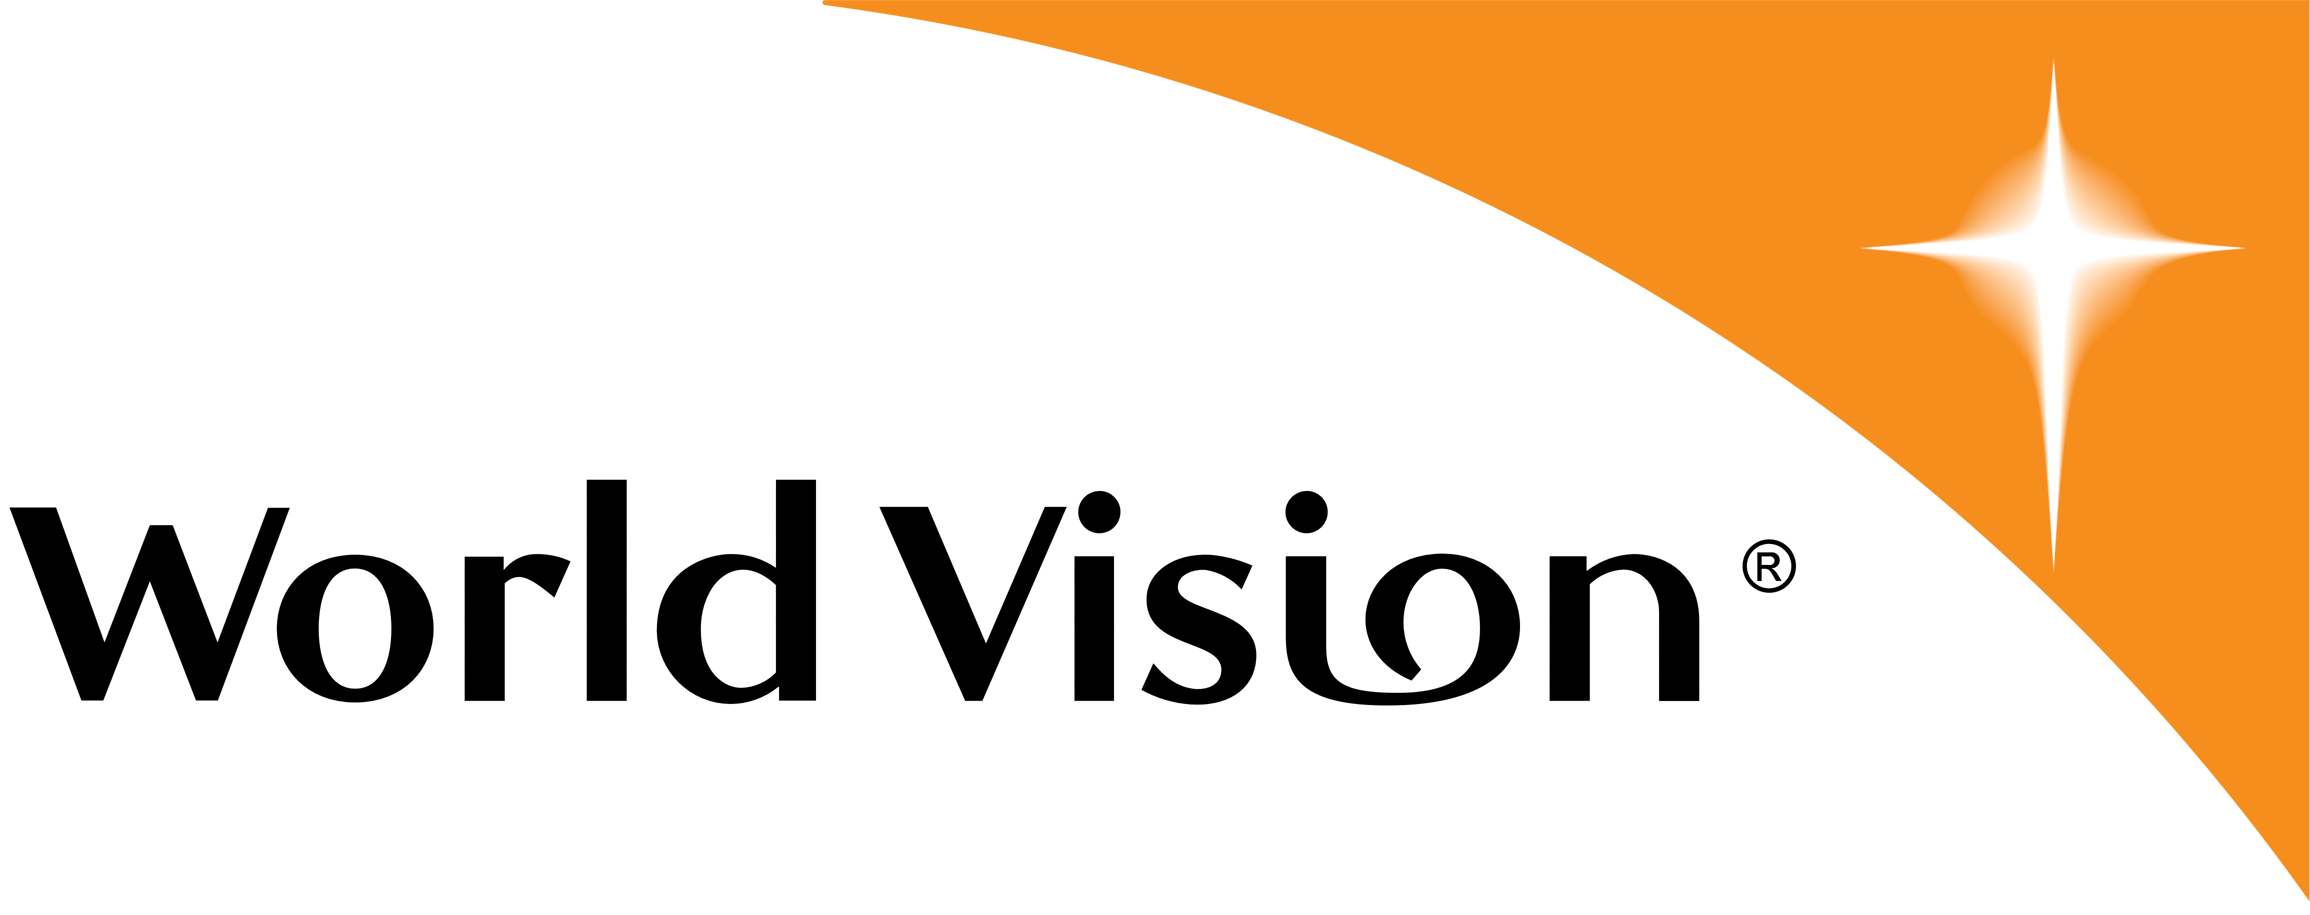 World_Vision_logo-1-1-3